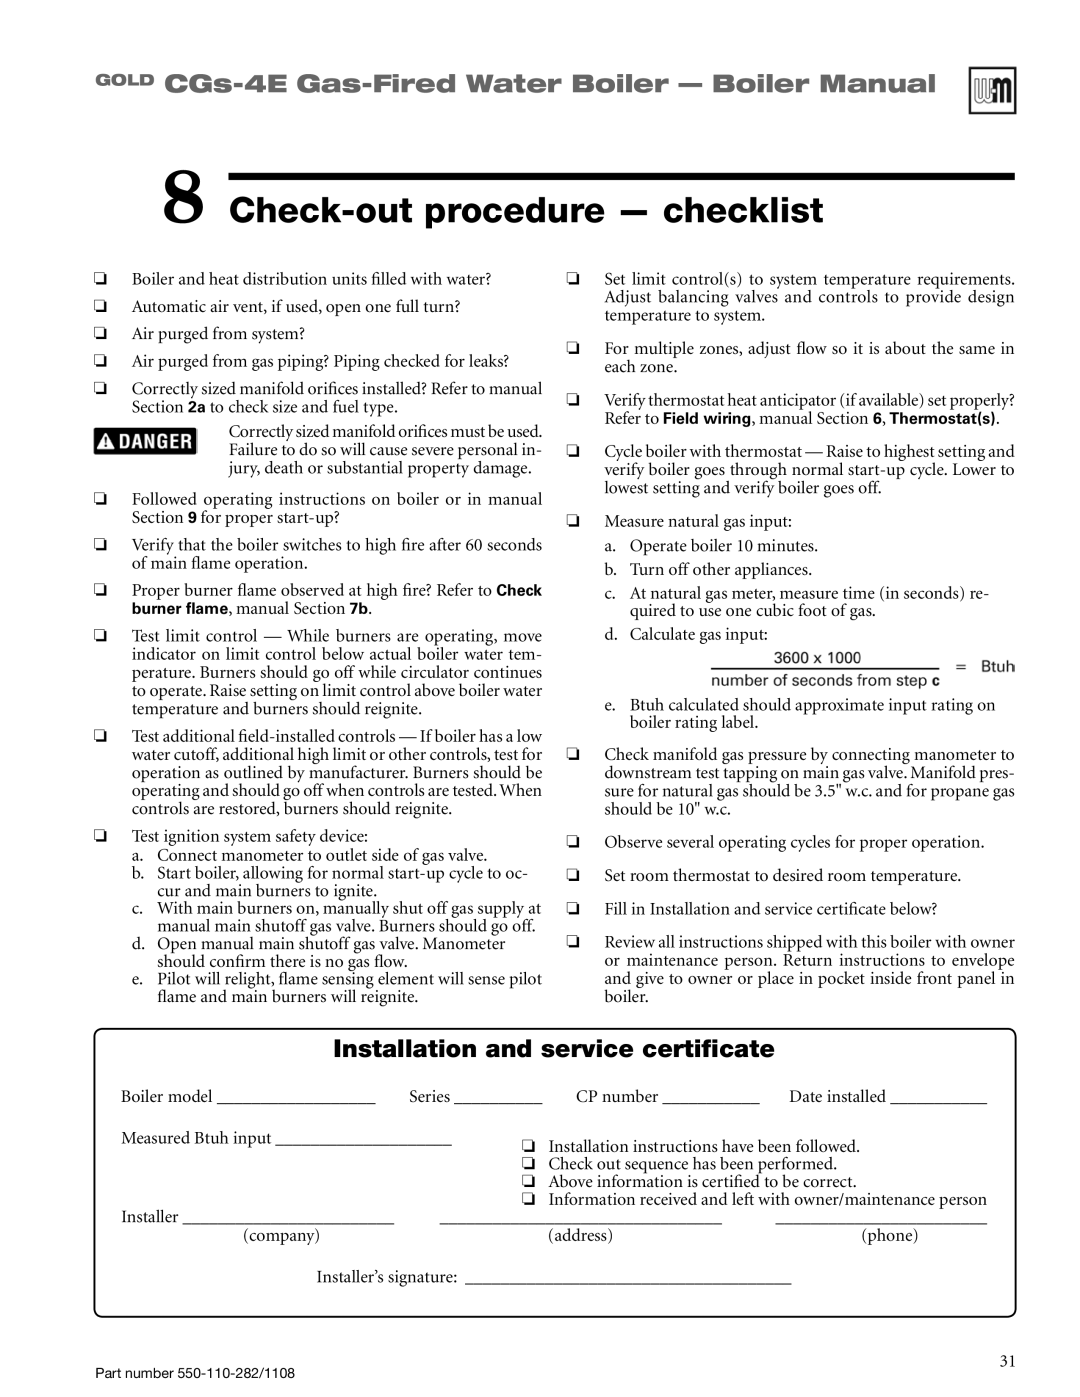 Weil-McLain CGS-4E manual Check-outprocedure - checklist, Installation and service certificate 